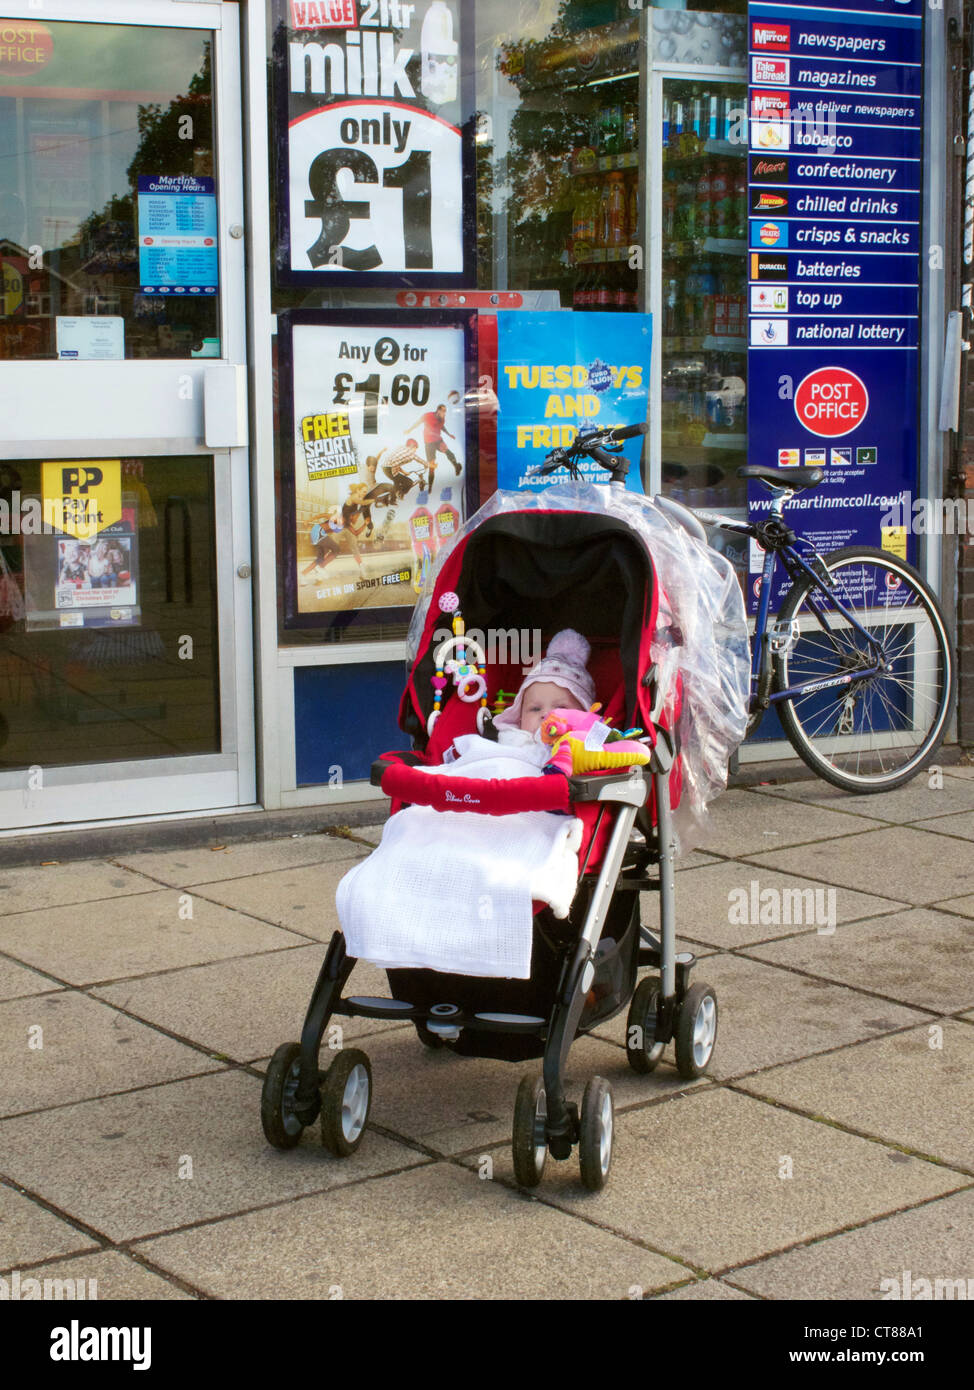 Baby left in pushchair in a poor area. Caldecott, Abingdon, Oxfordshire. Model Released. Stock Photo